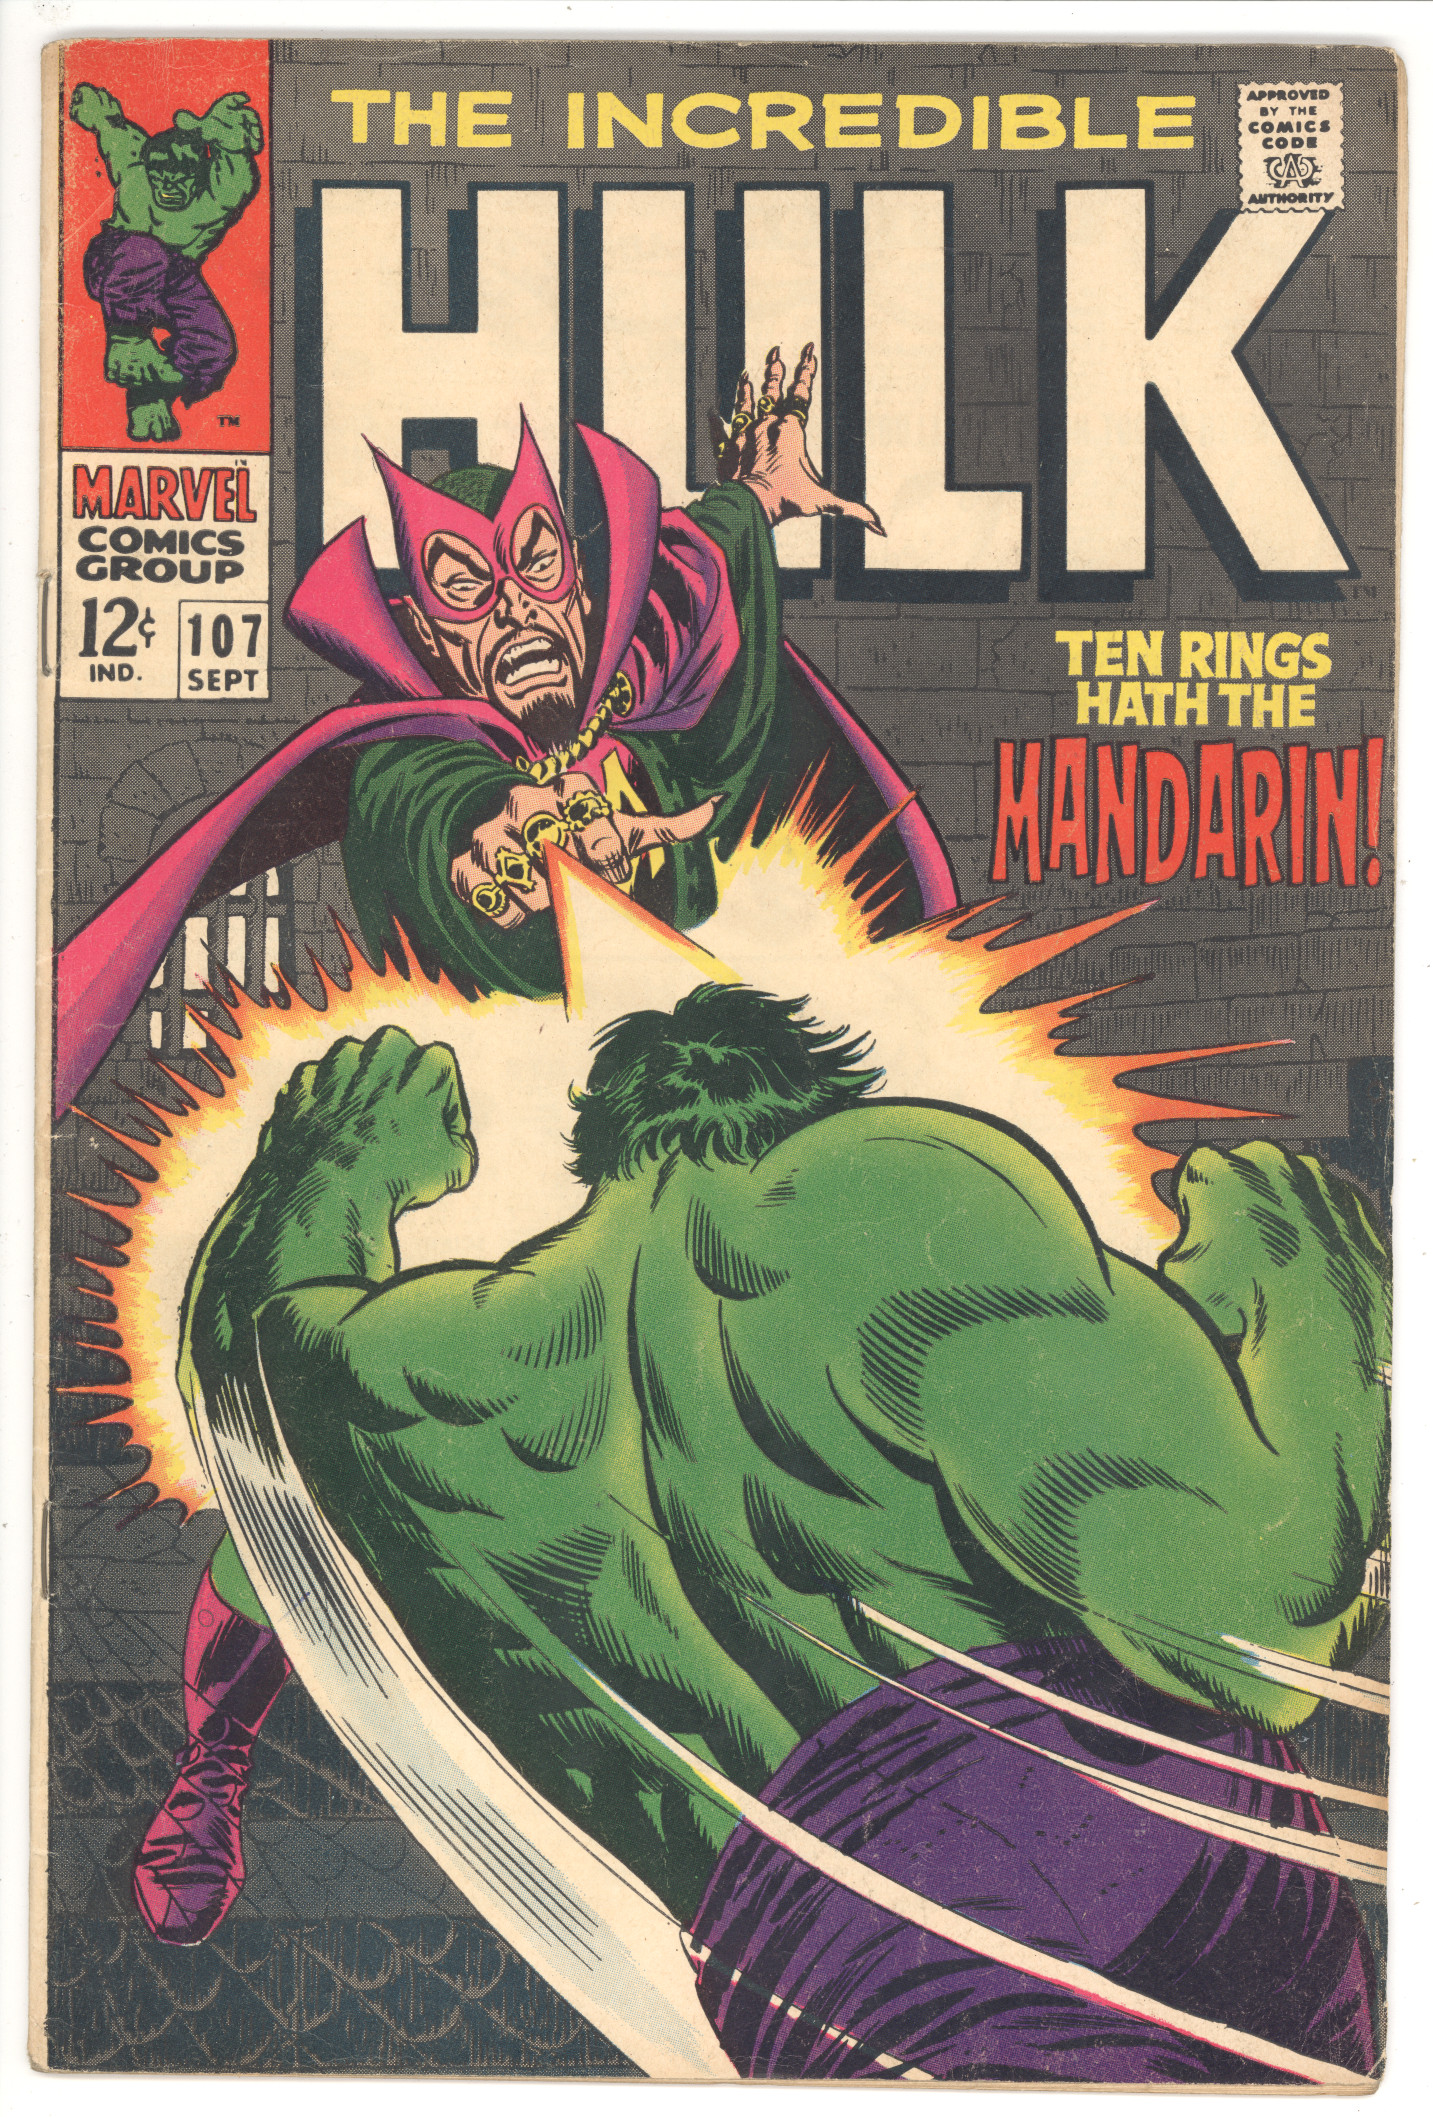 Incredible Hulk #107 front